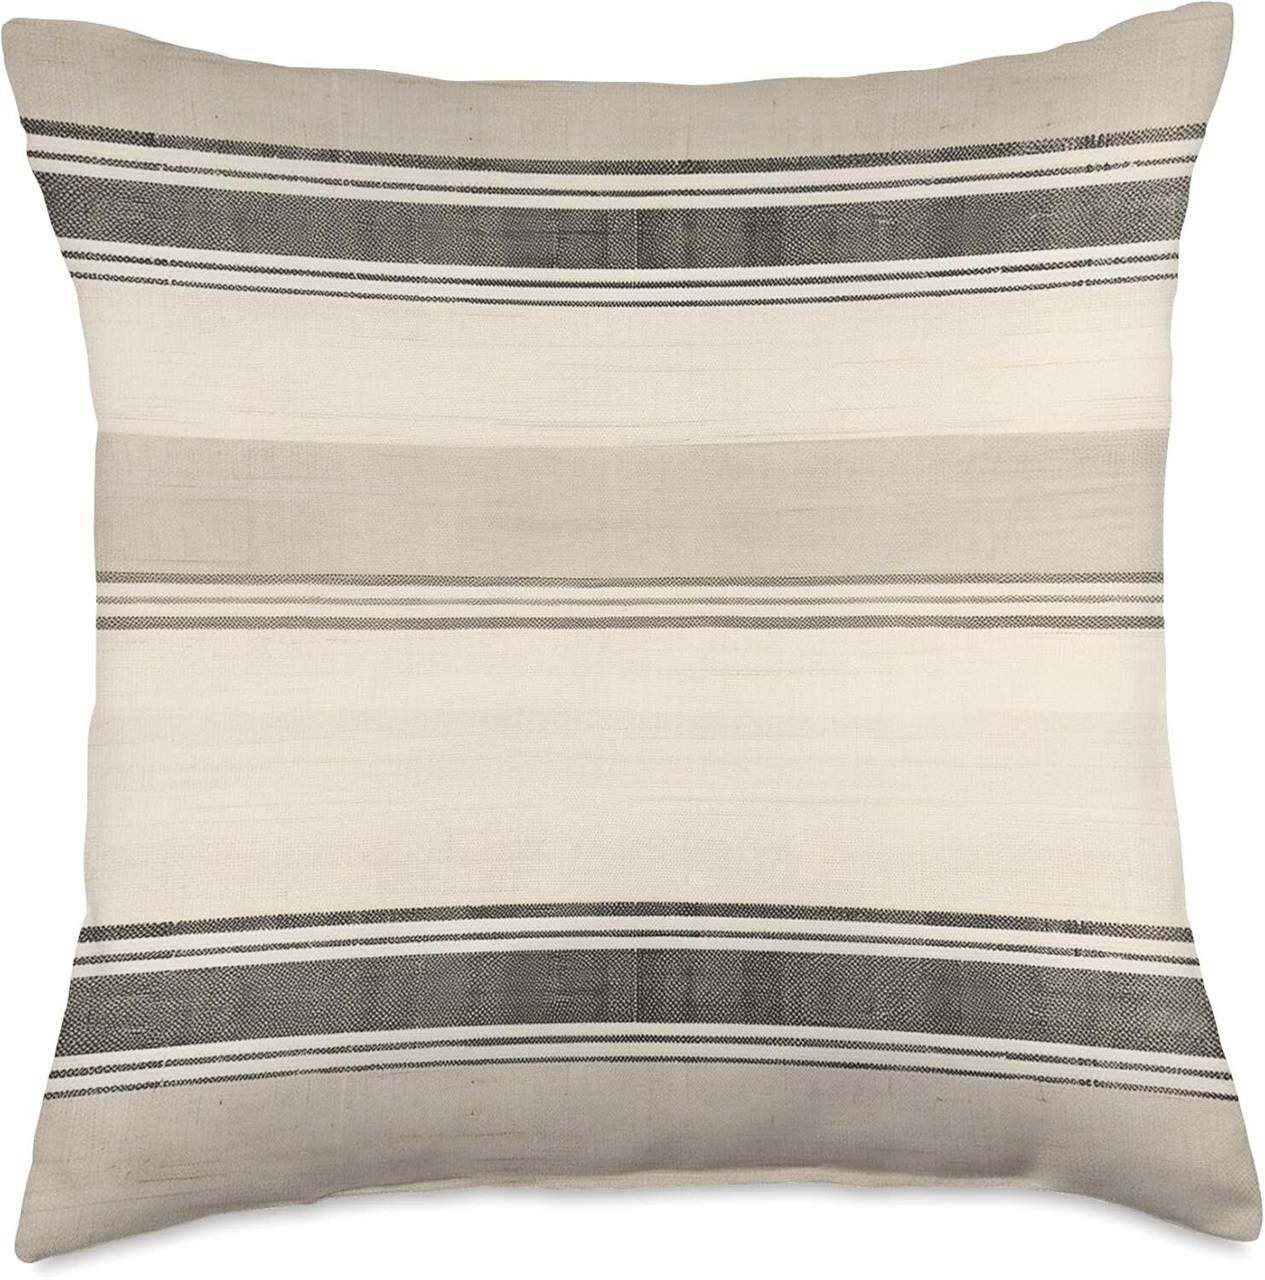 Warm Neutral Stripes Black Back Throw Pillow 18x18